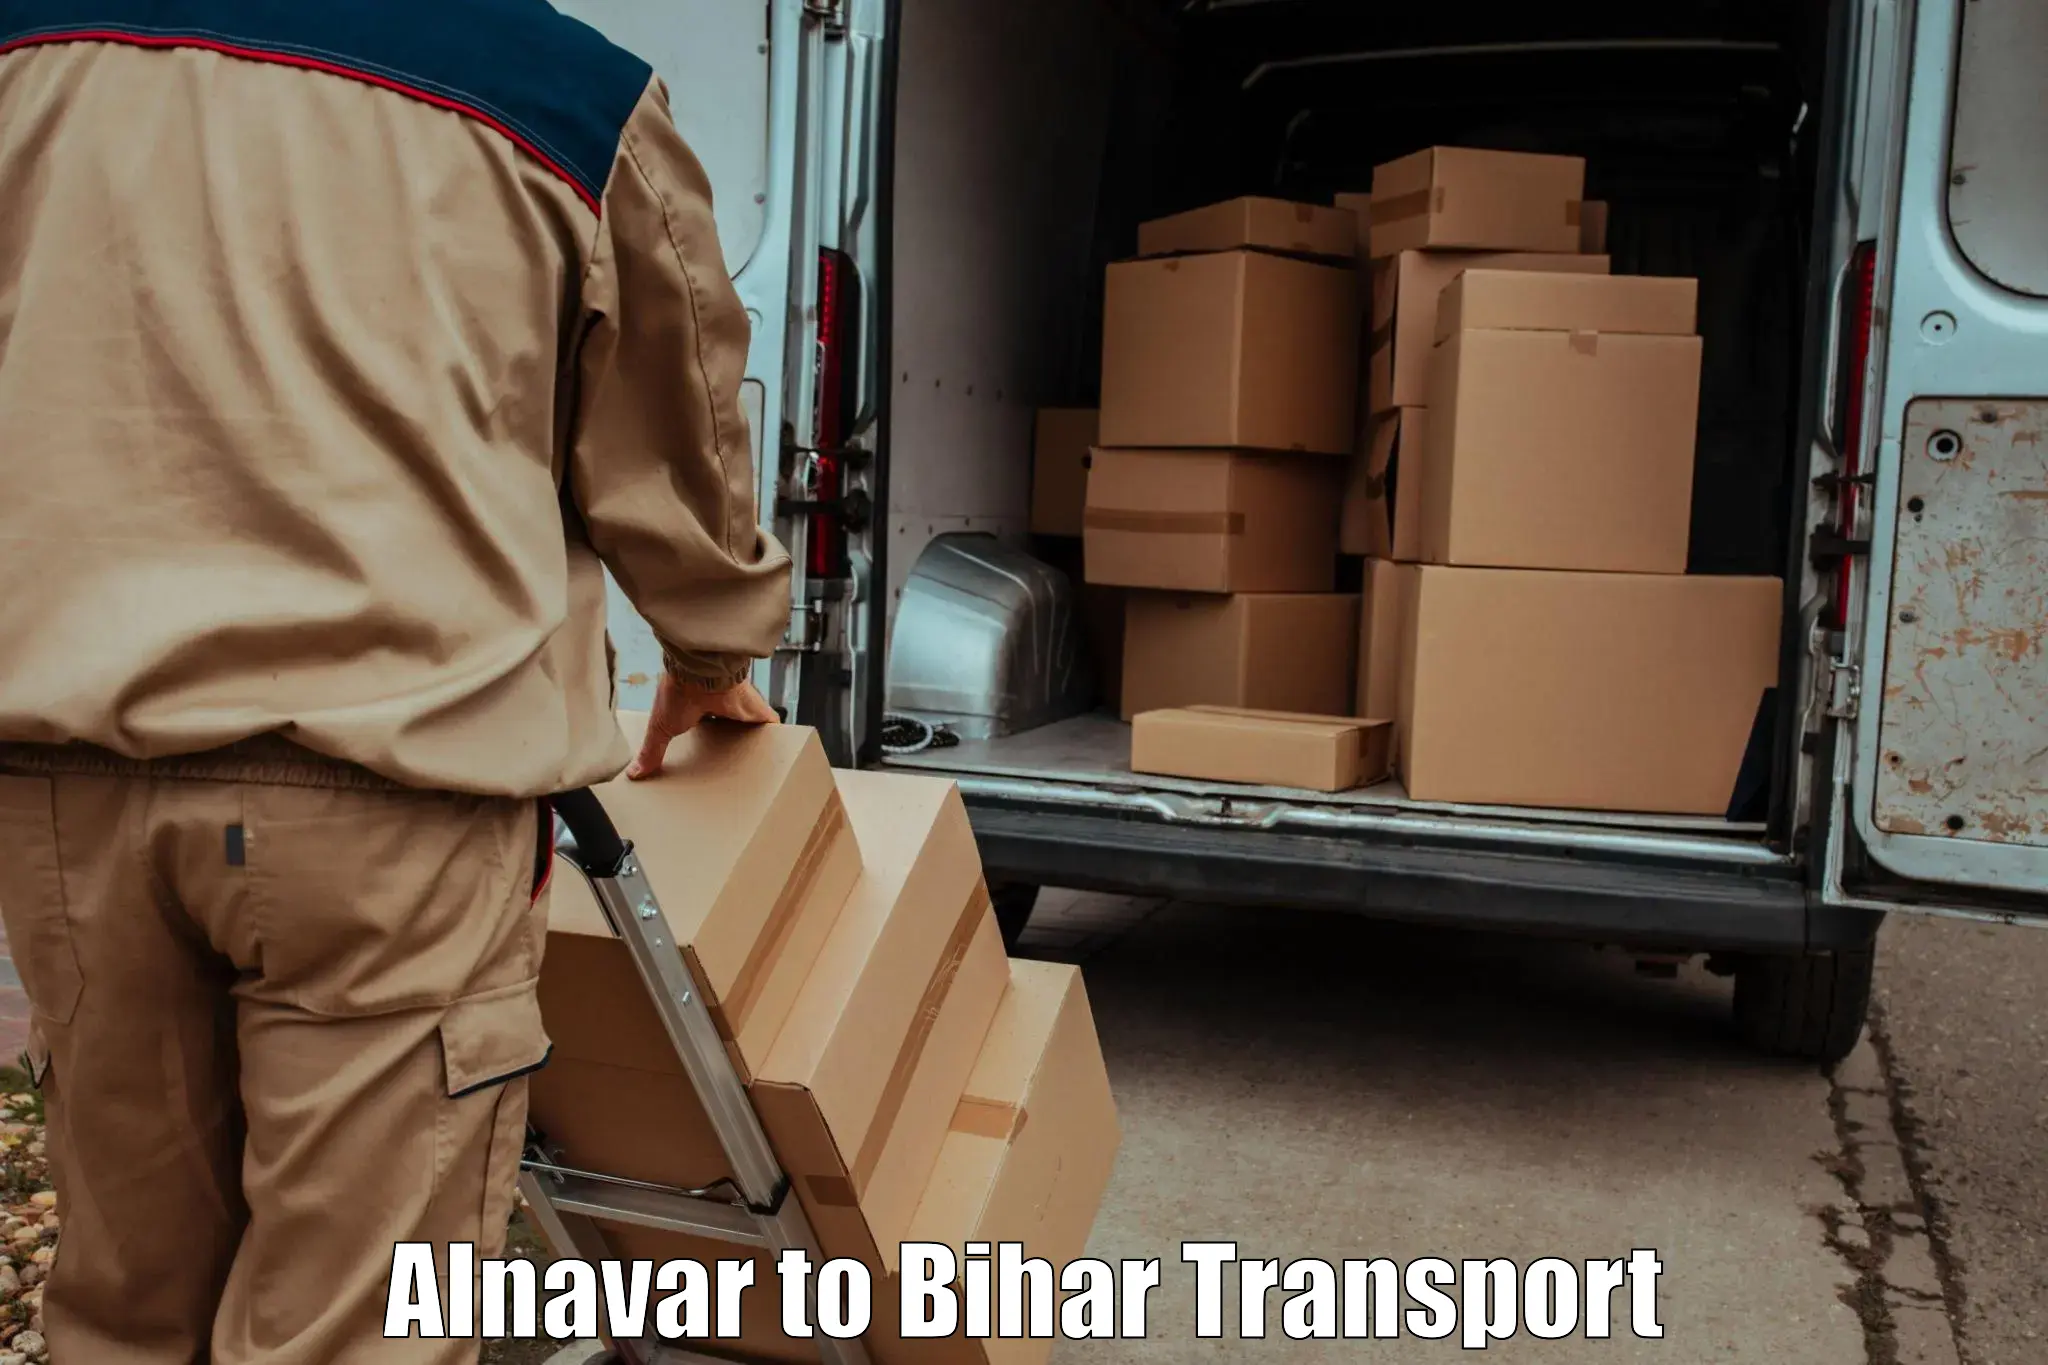 Furniture transport service Alnavar to Bihar